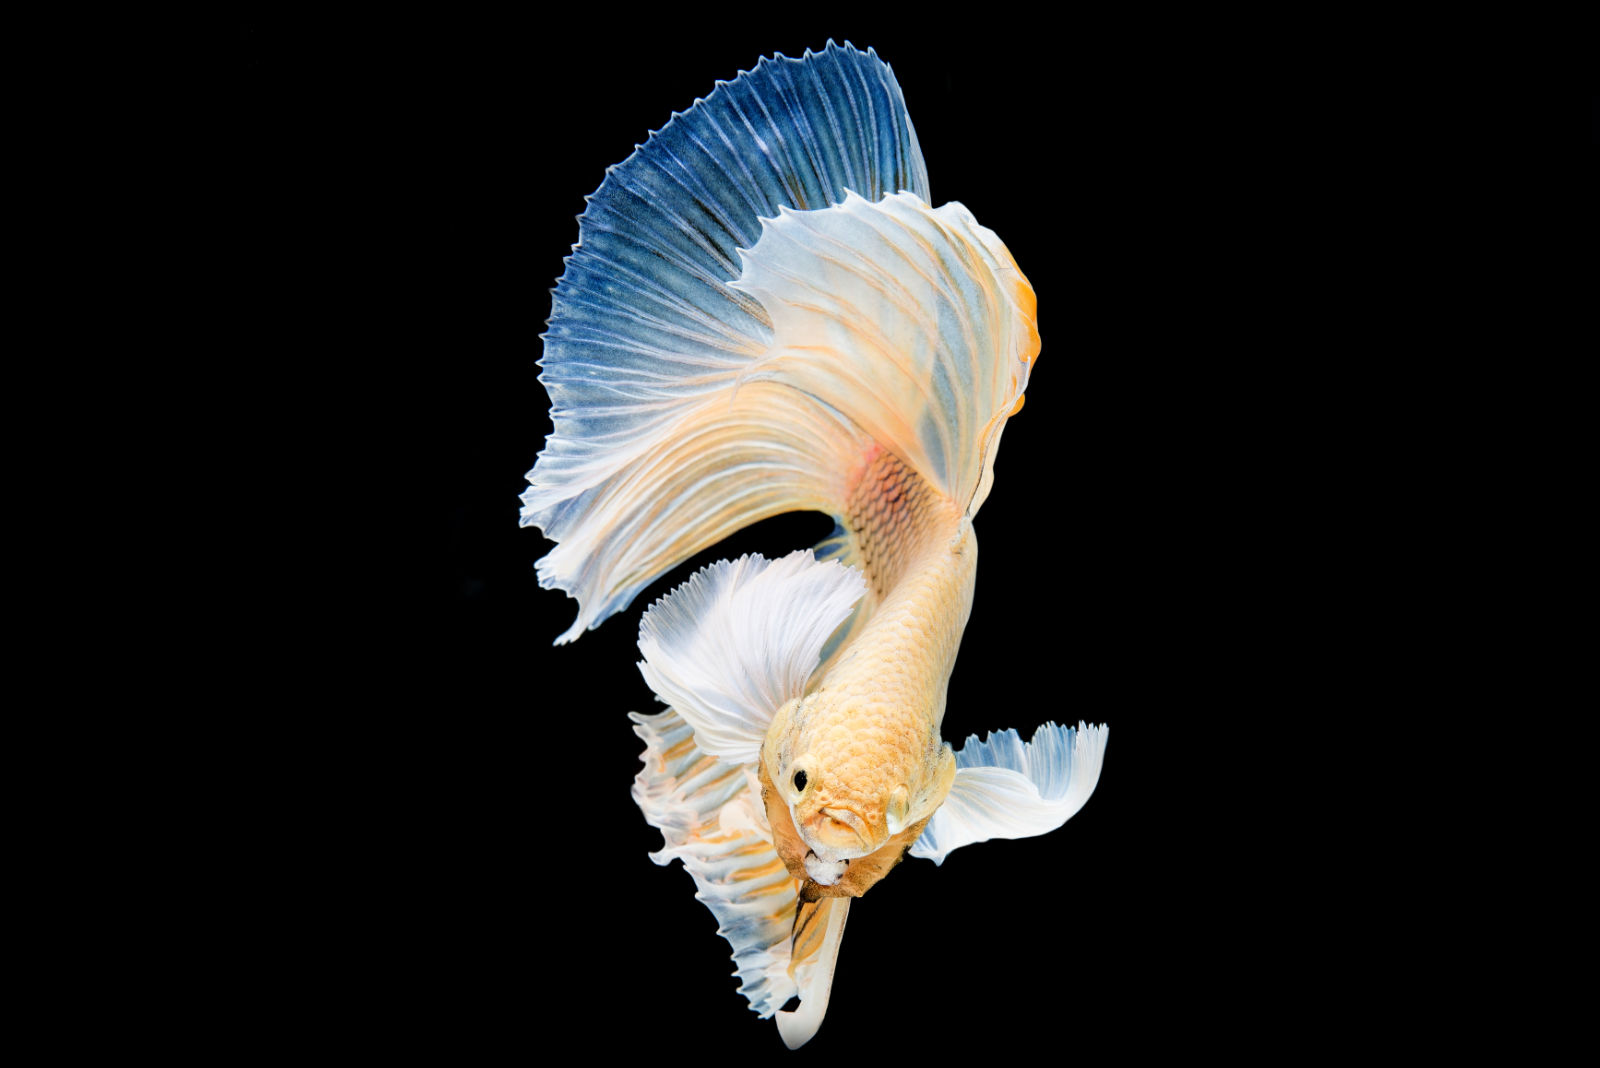 Pesce combattente (Betta splendens) - Bianco